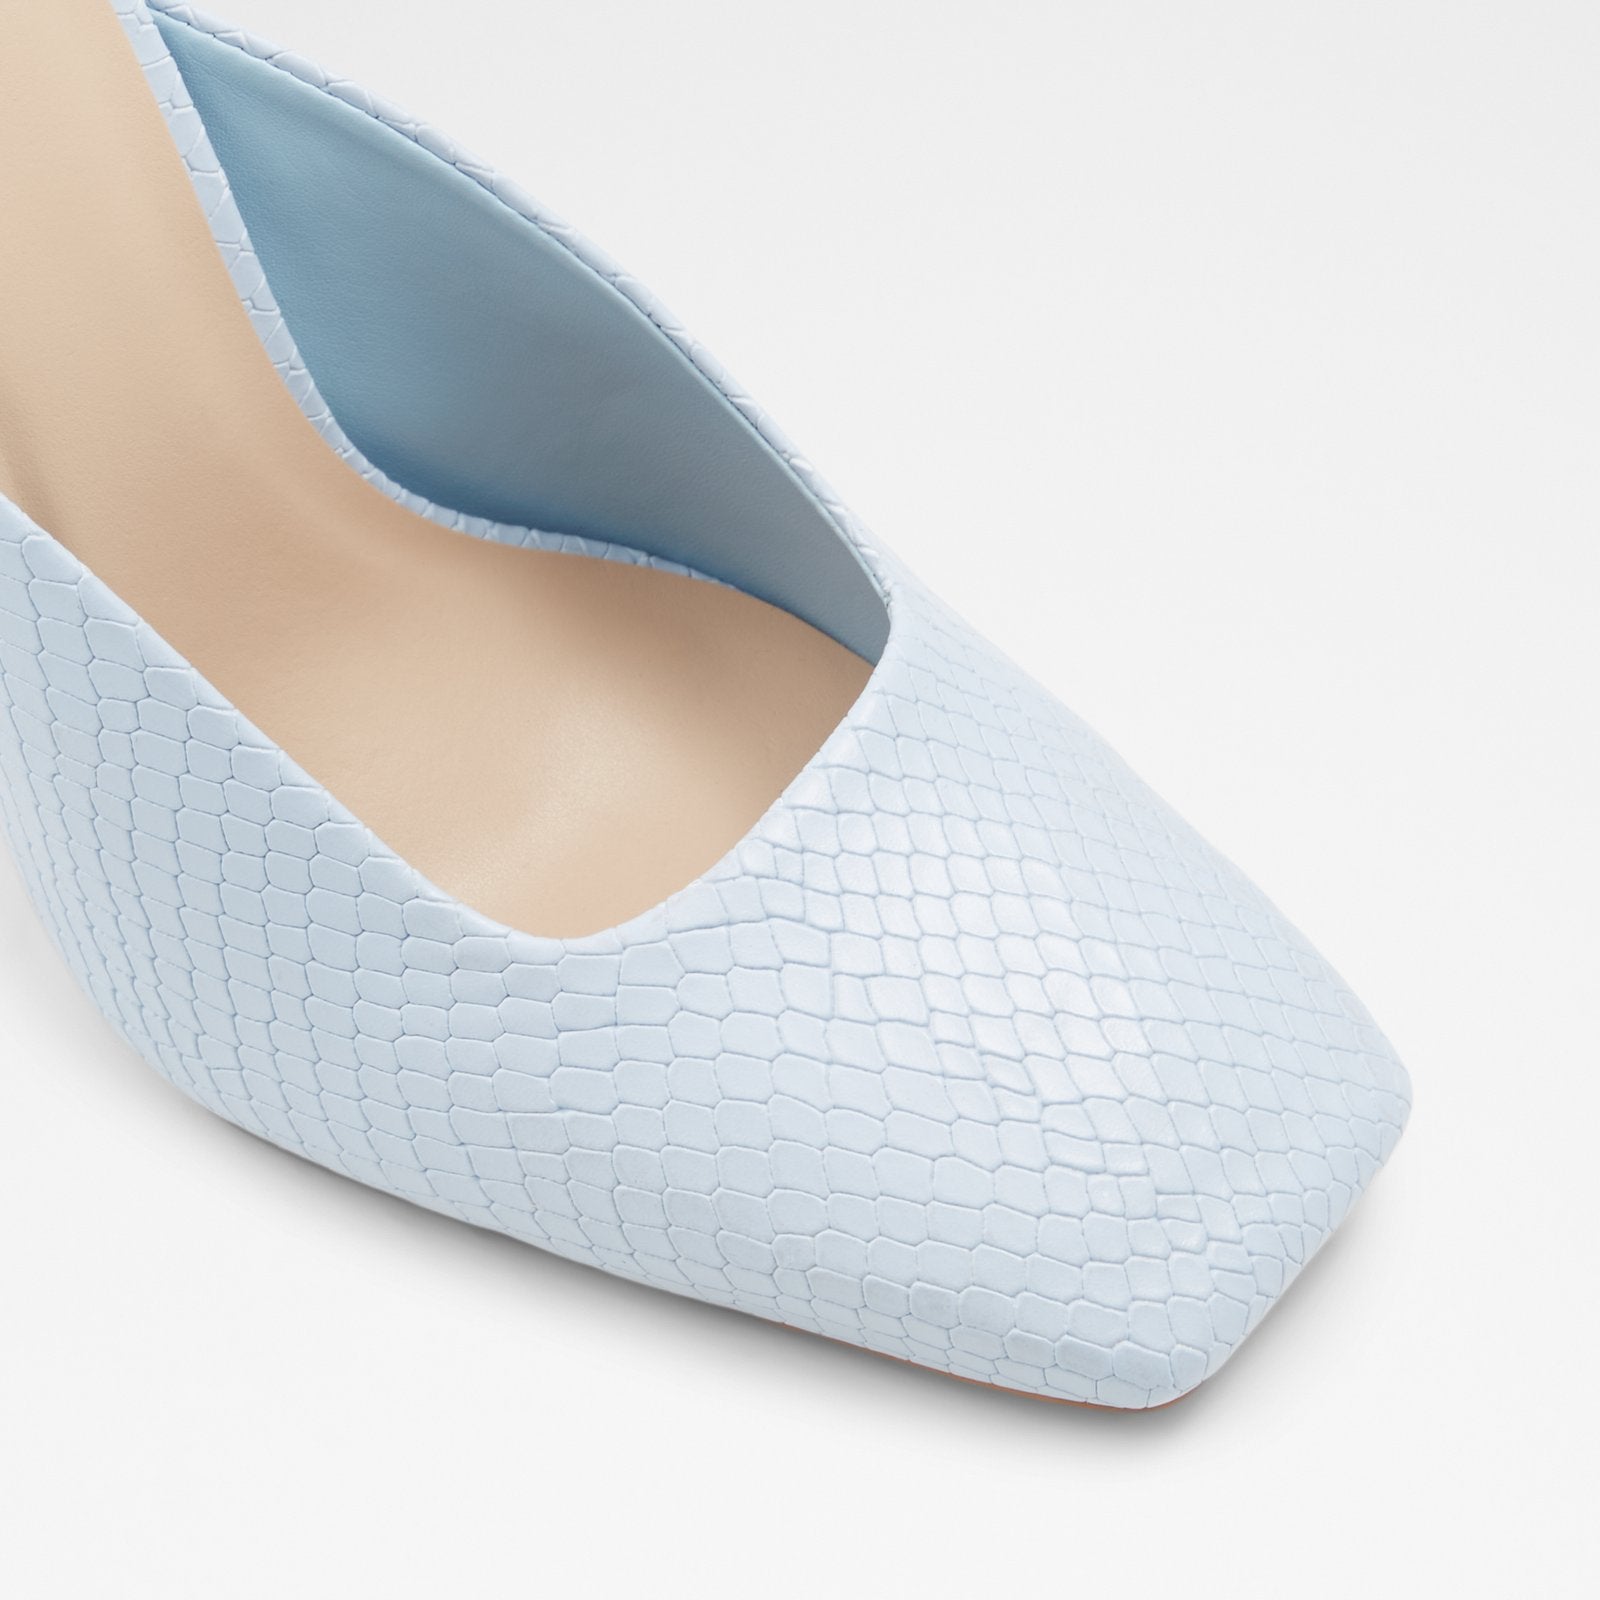 Rhiraniel Women Shoes - Light Blue - ALDO KSA